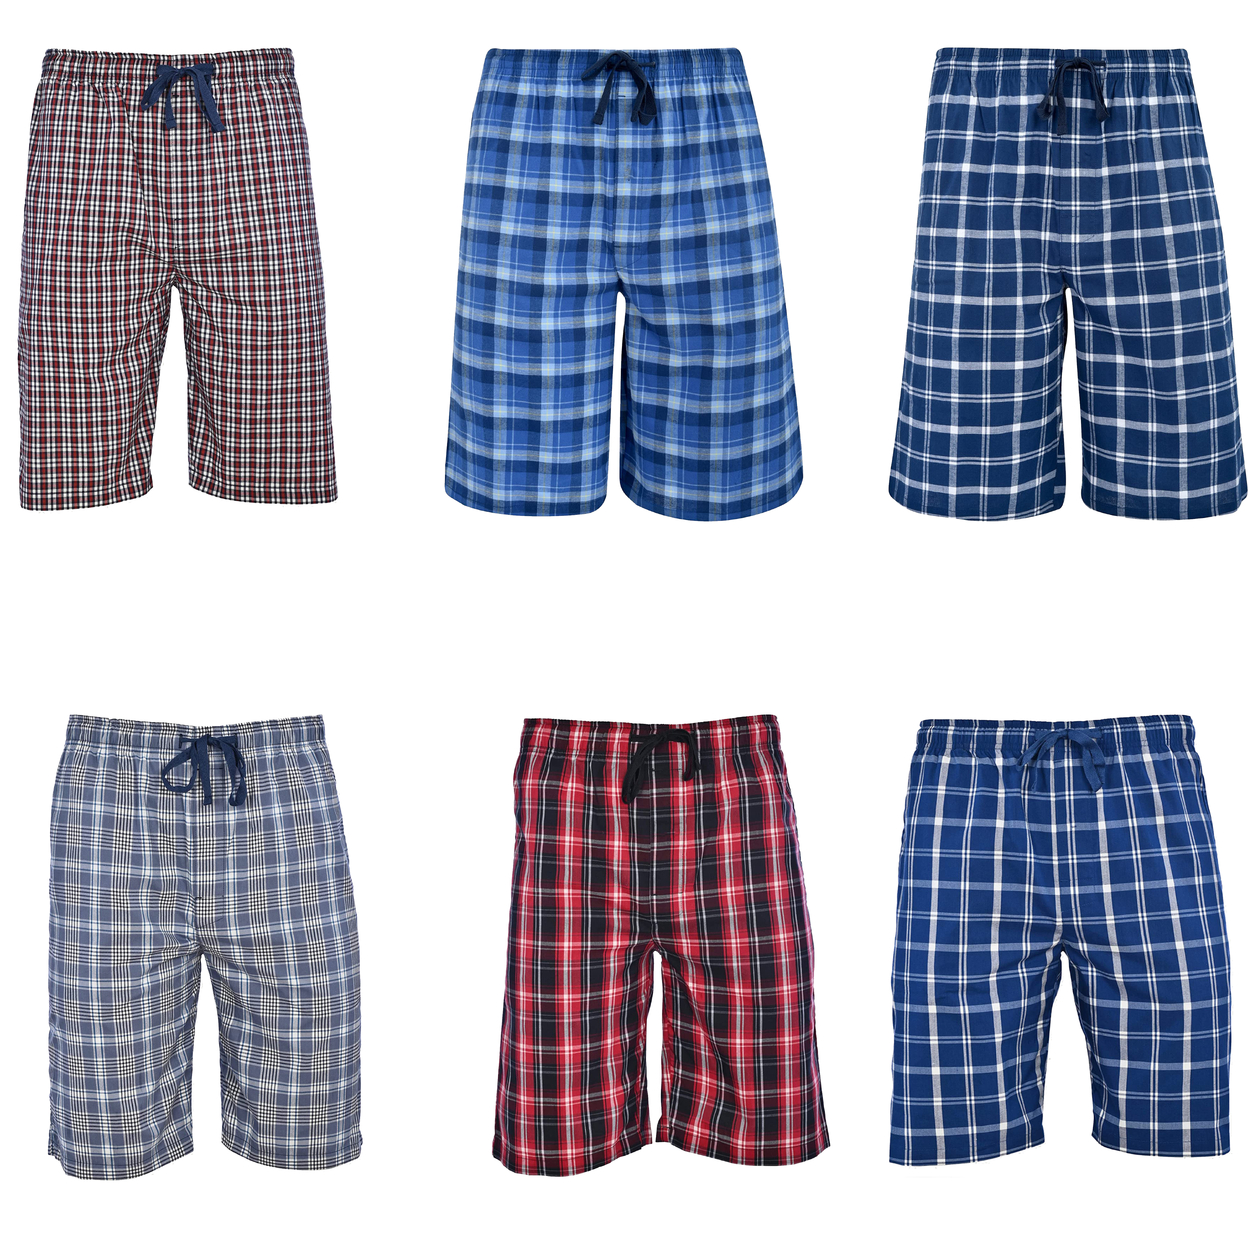 2-Pack: Men's Ultra Soft Plaid Lounge Pajama Sleep Wear Shorts - Tan & Tan, Large